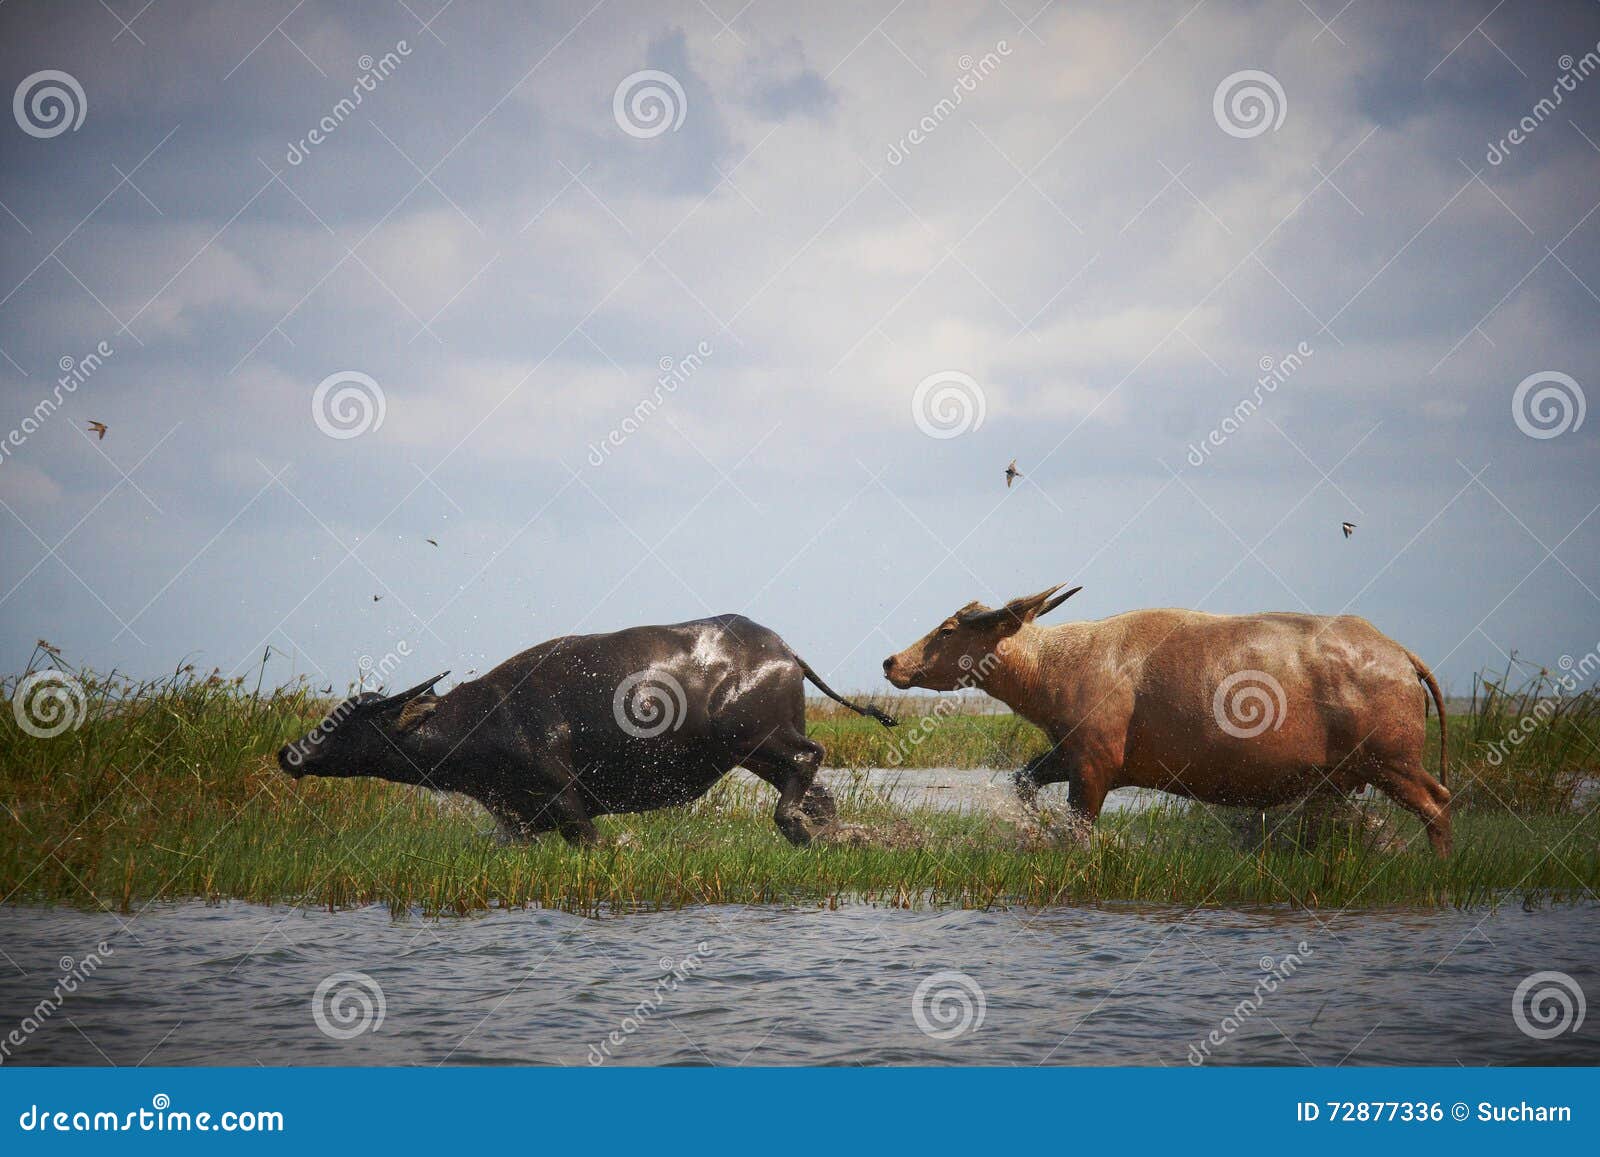 Buffalo on water. stock photo. Image of motion, - 72877336